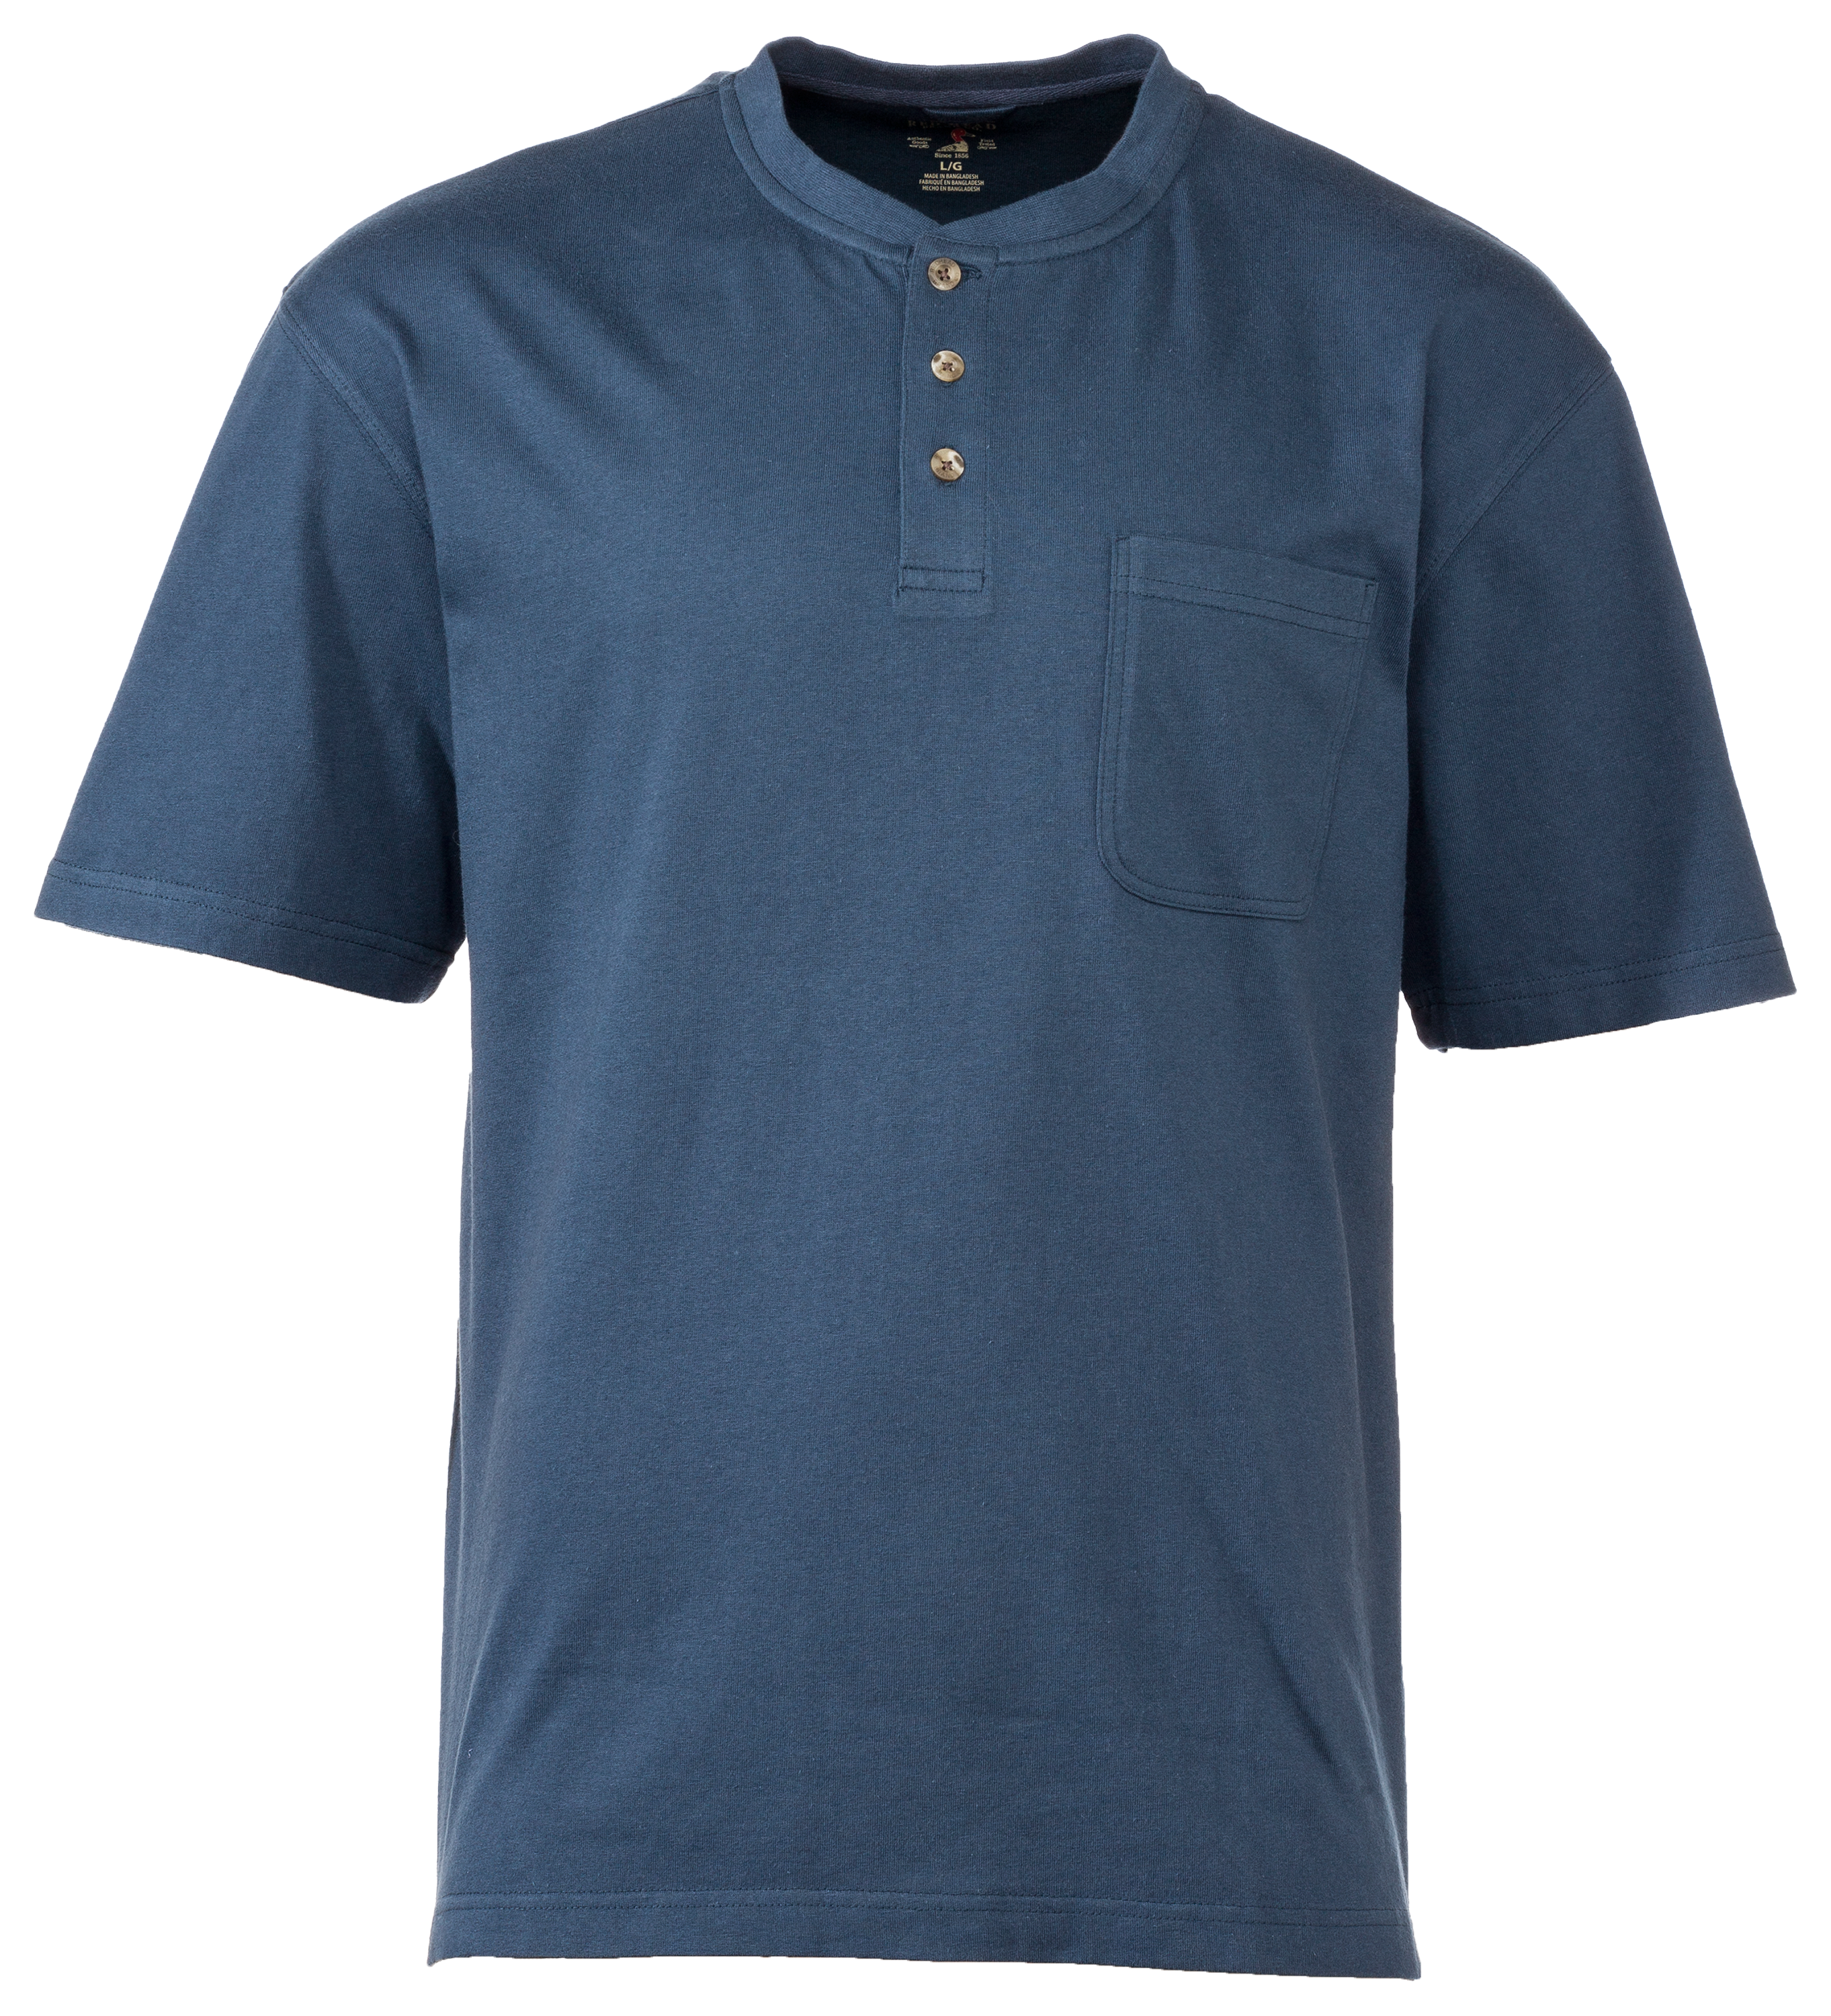 RedHead Henley Pocket Short-Sleeve Shirt for Men - Cadet Blue - 2XL